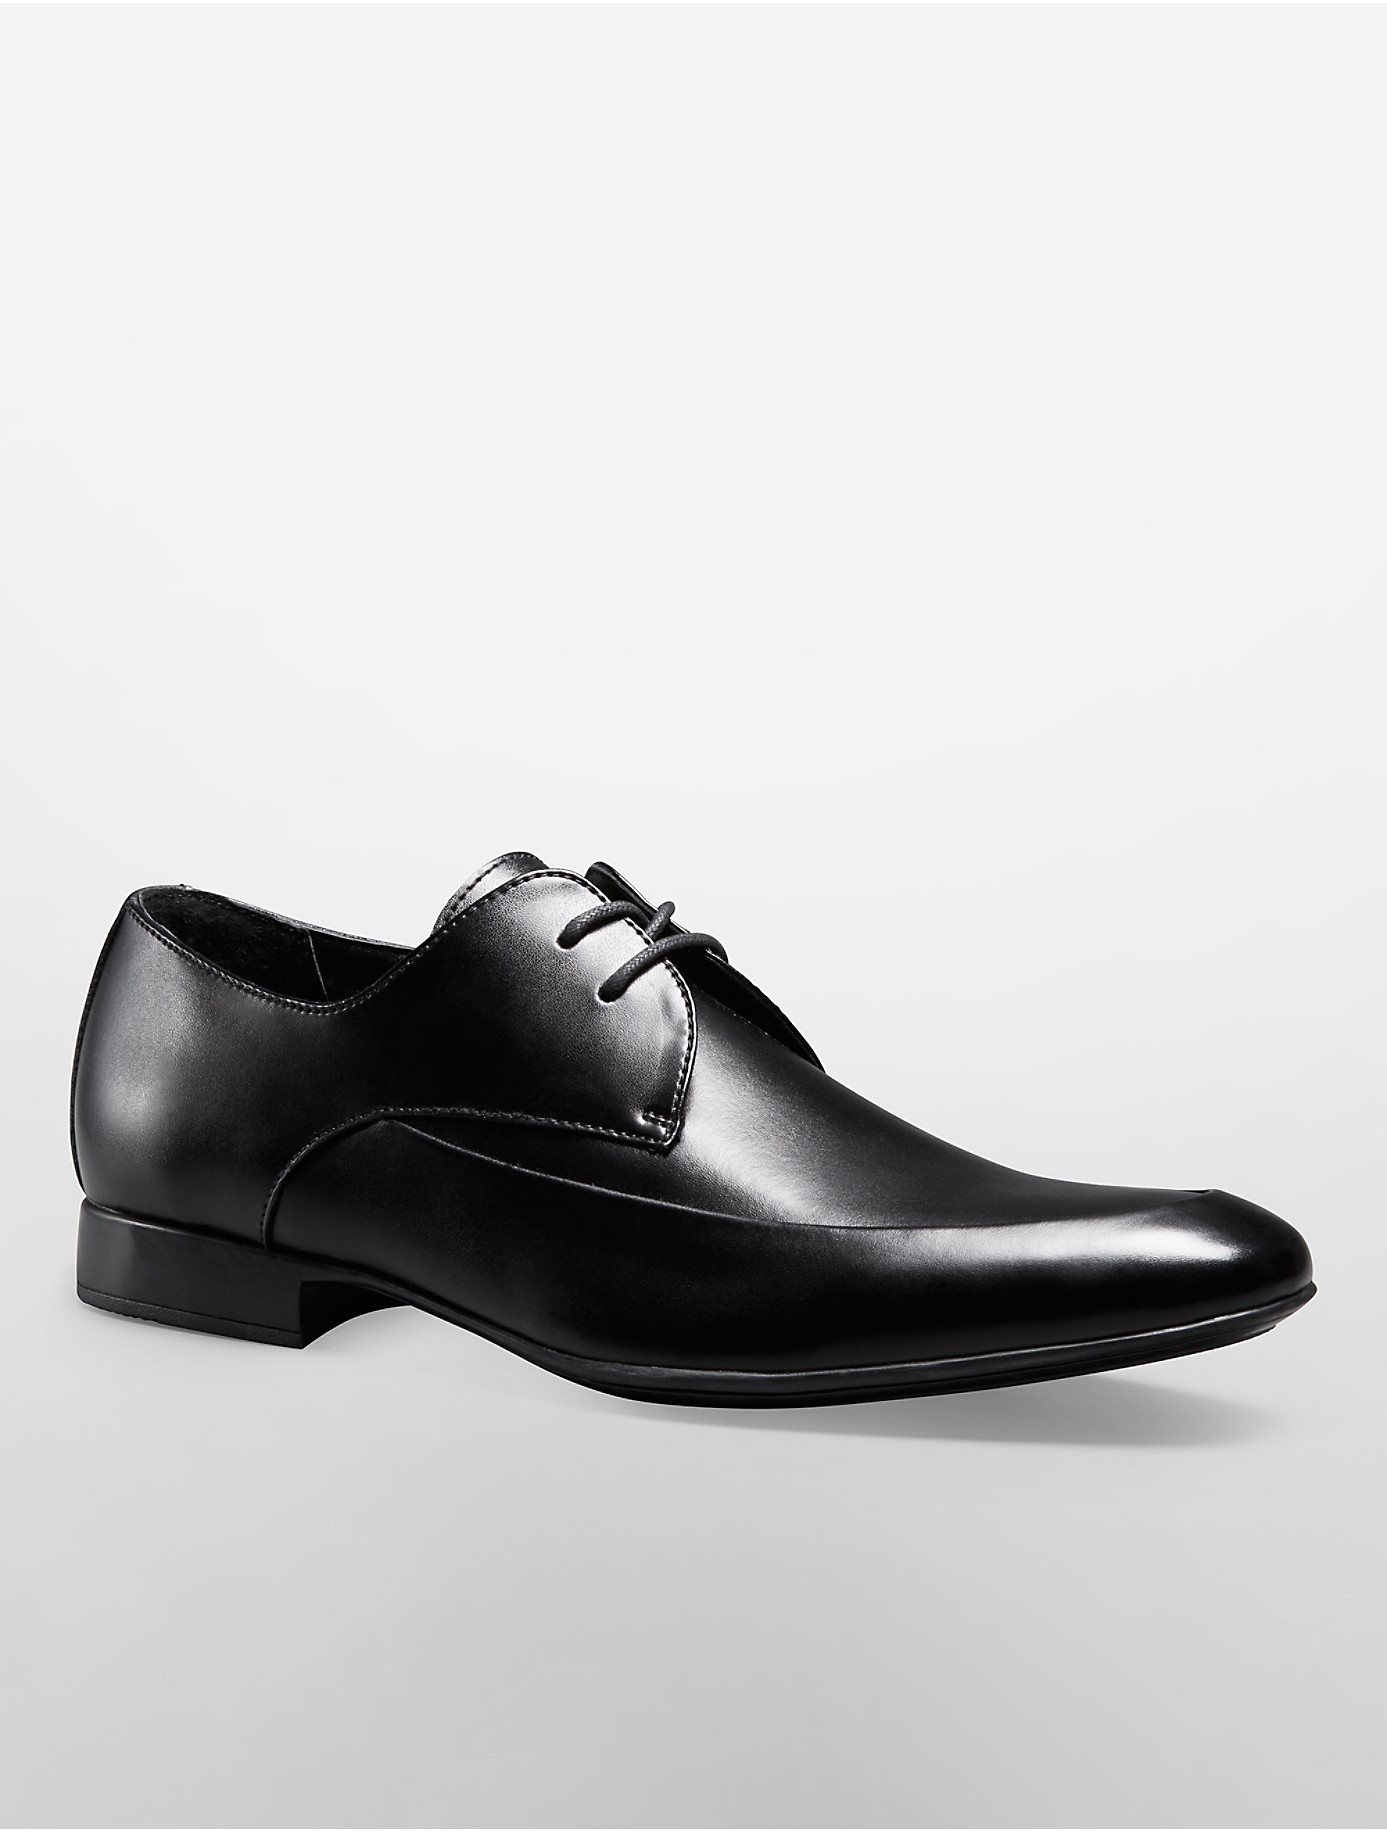 Lyst - Calvin Klein Geoff Lace-up Dress Shoe in Black for Men